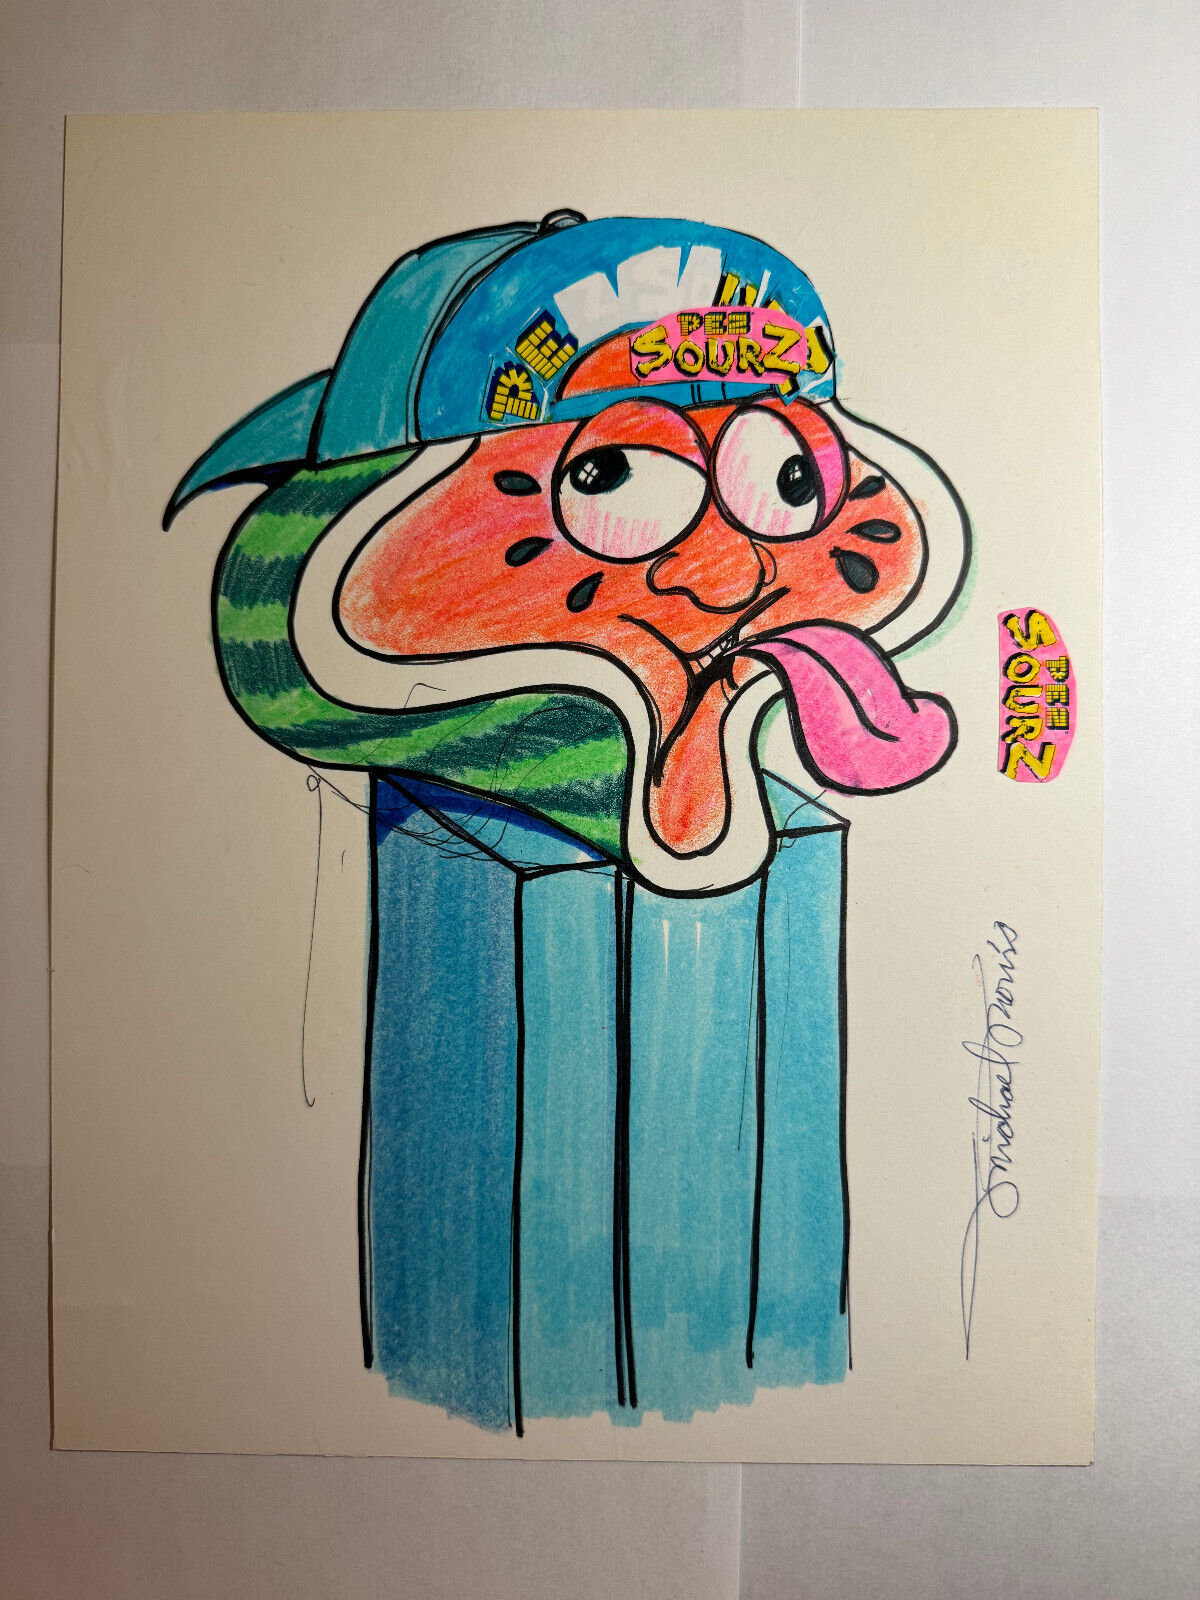 ORIGINAL PEZ Sourz Sketch - Watermelon - Hand-drawn from original design artist